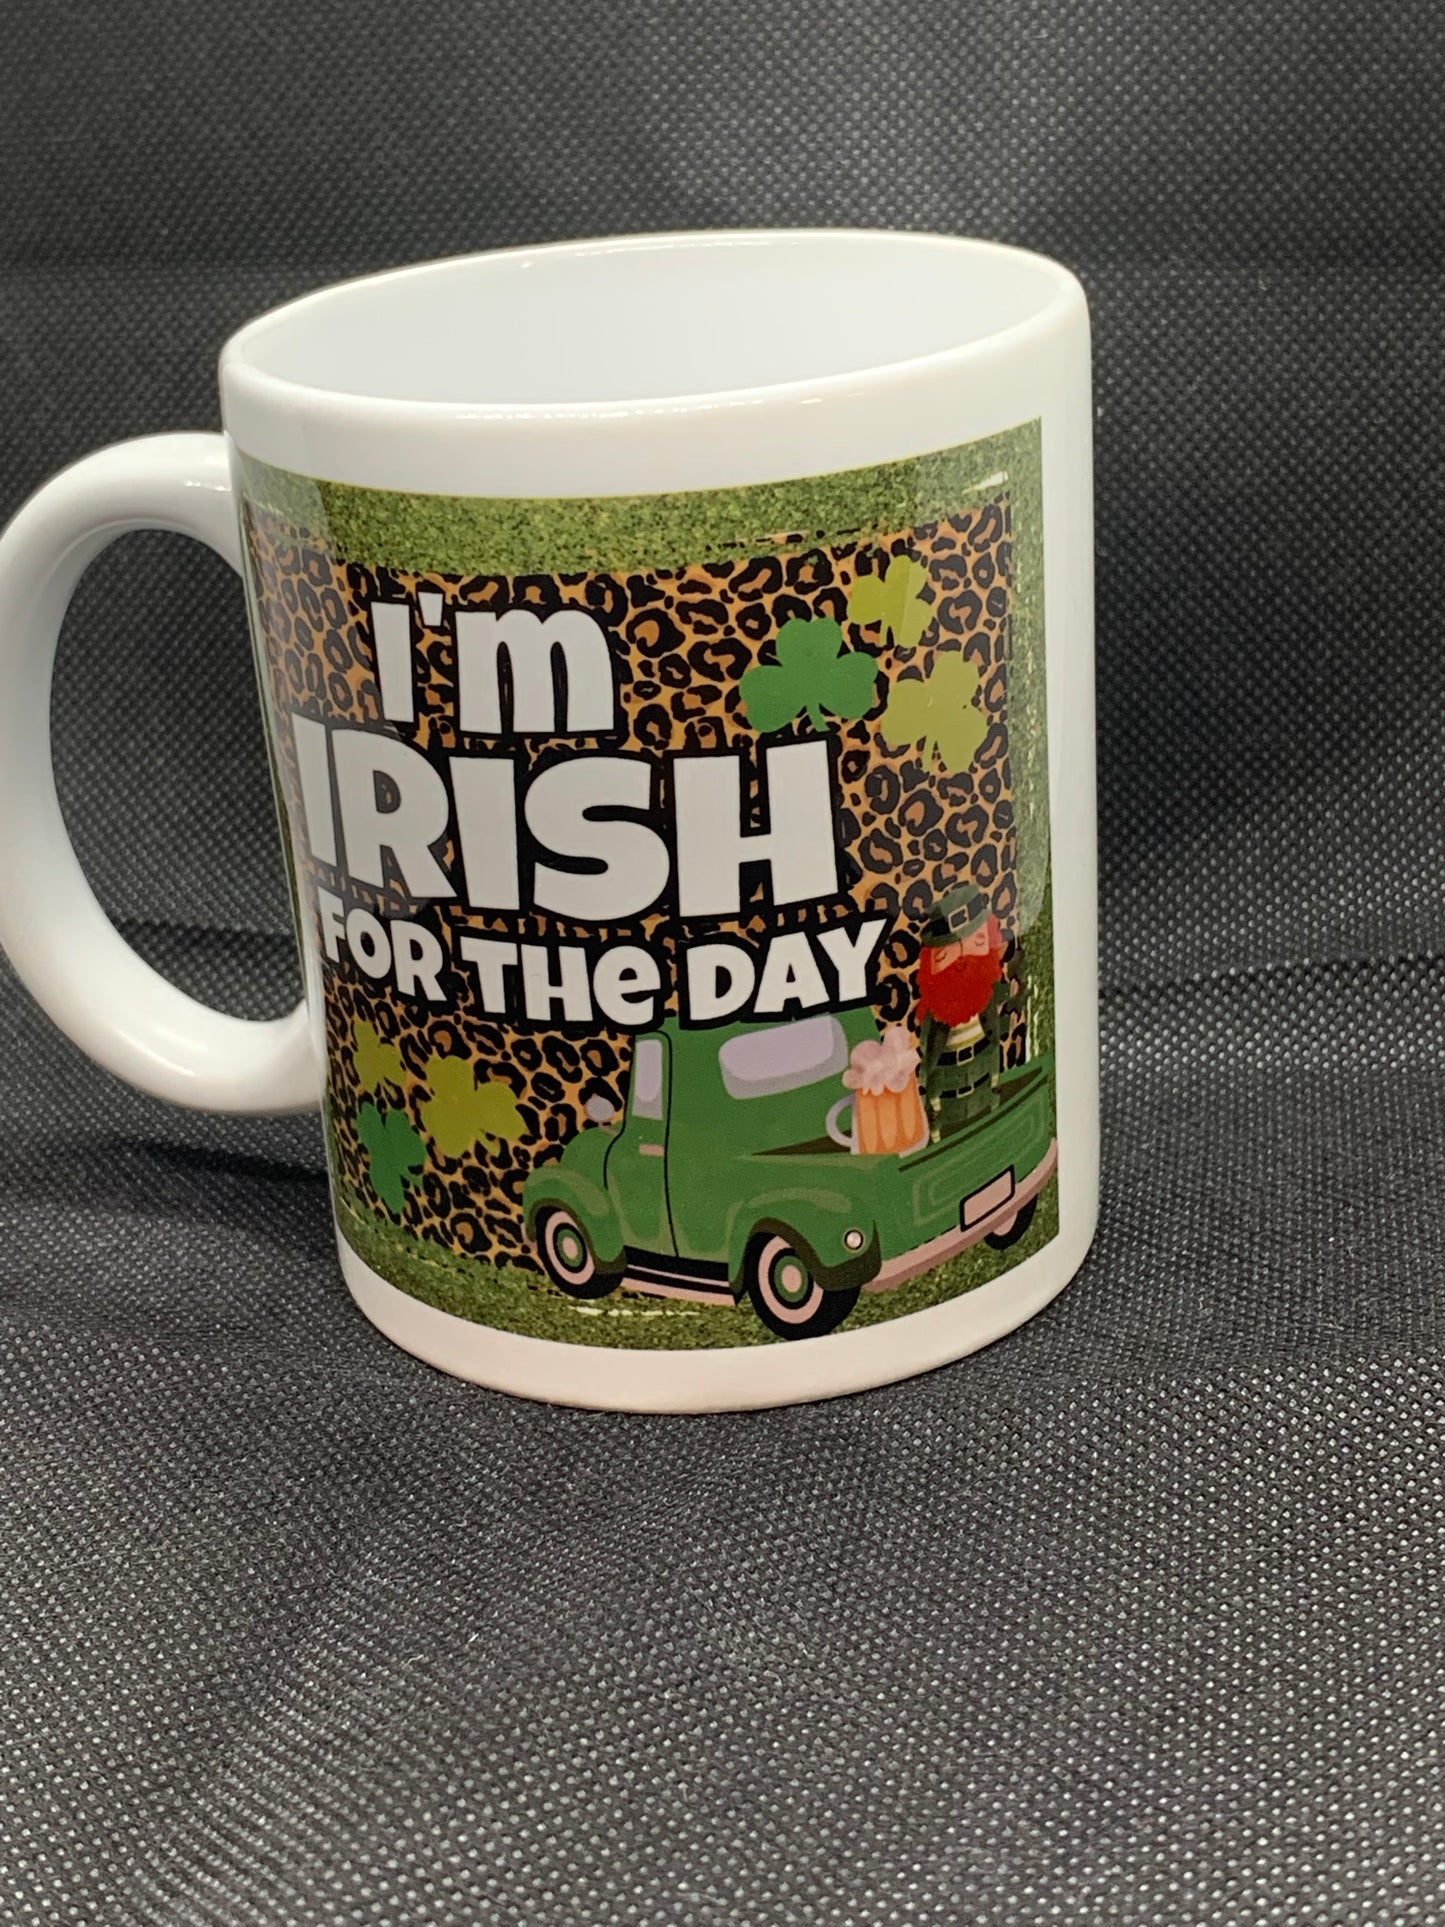 I'm Irish for the day mug